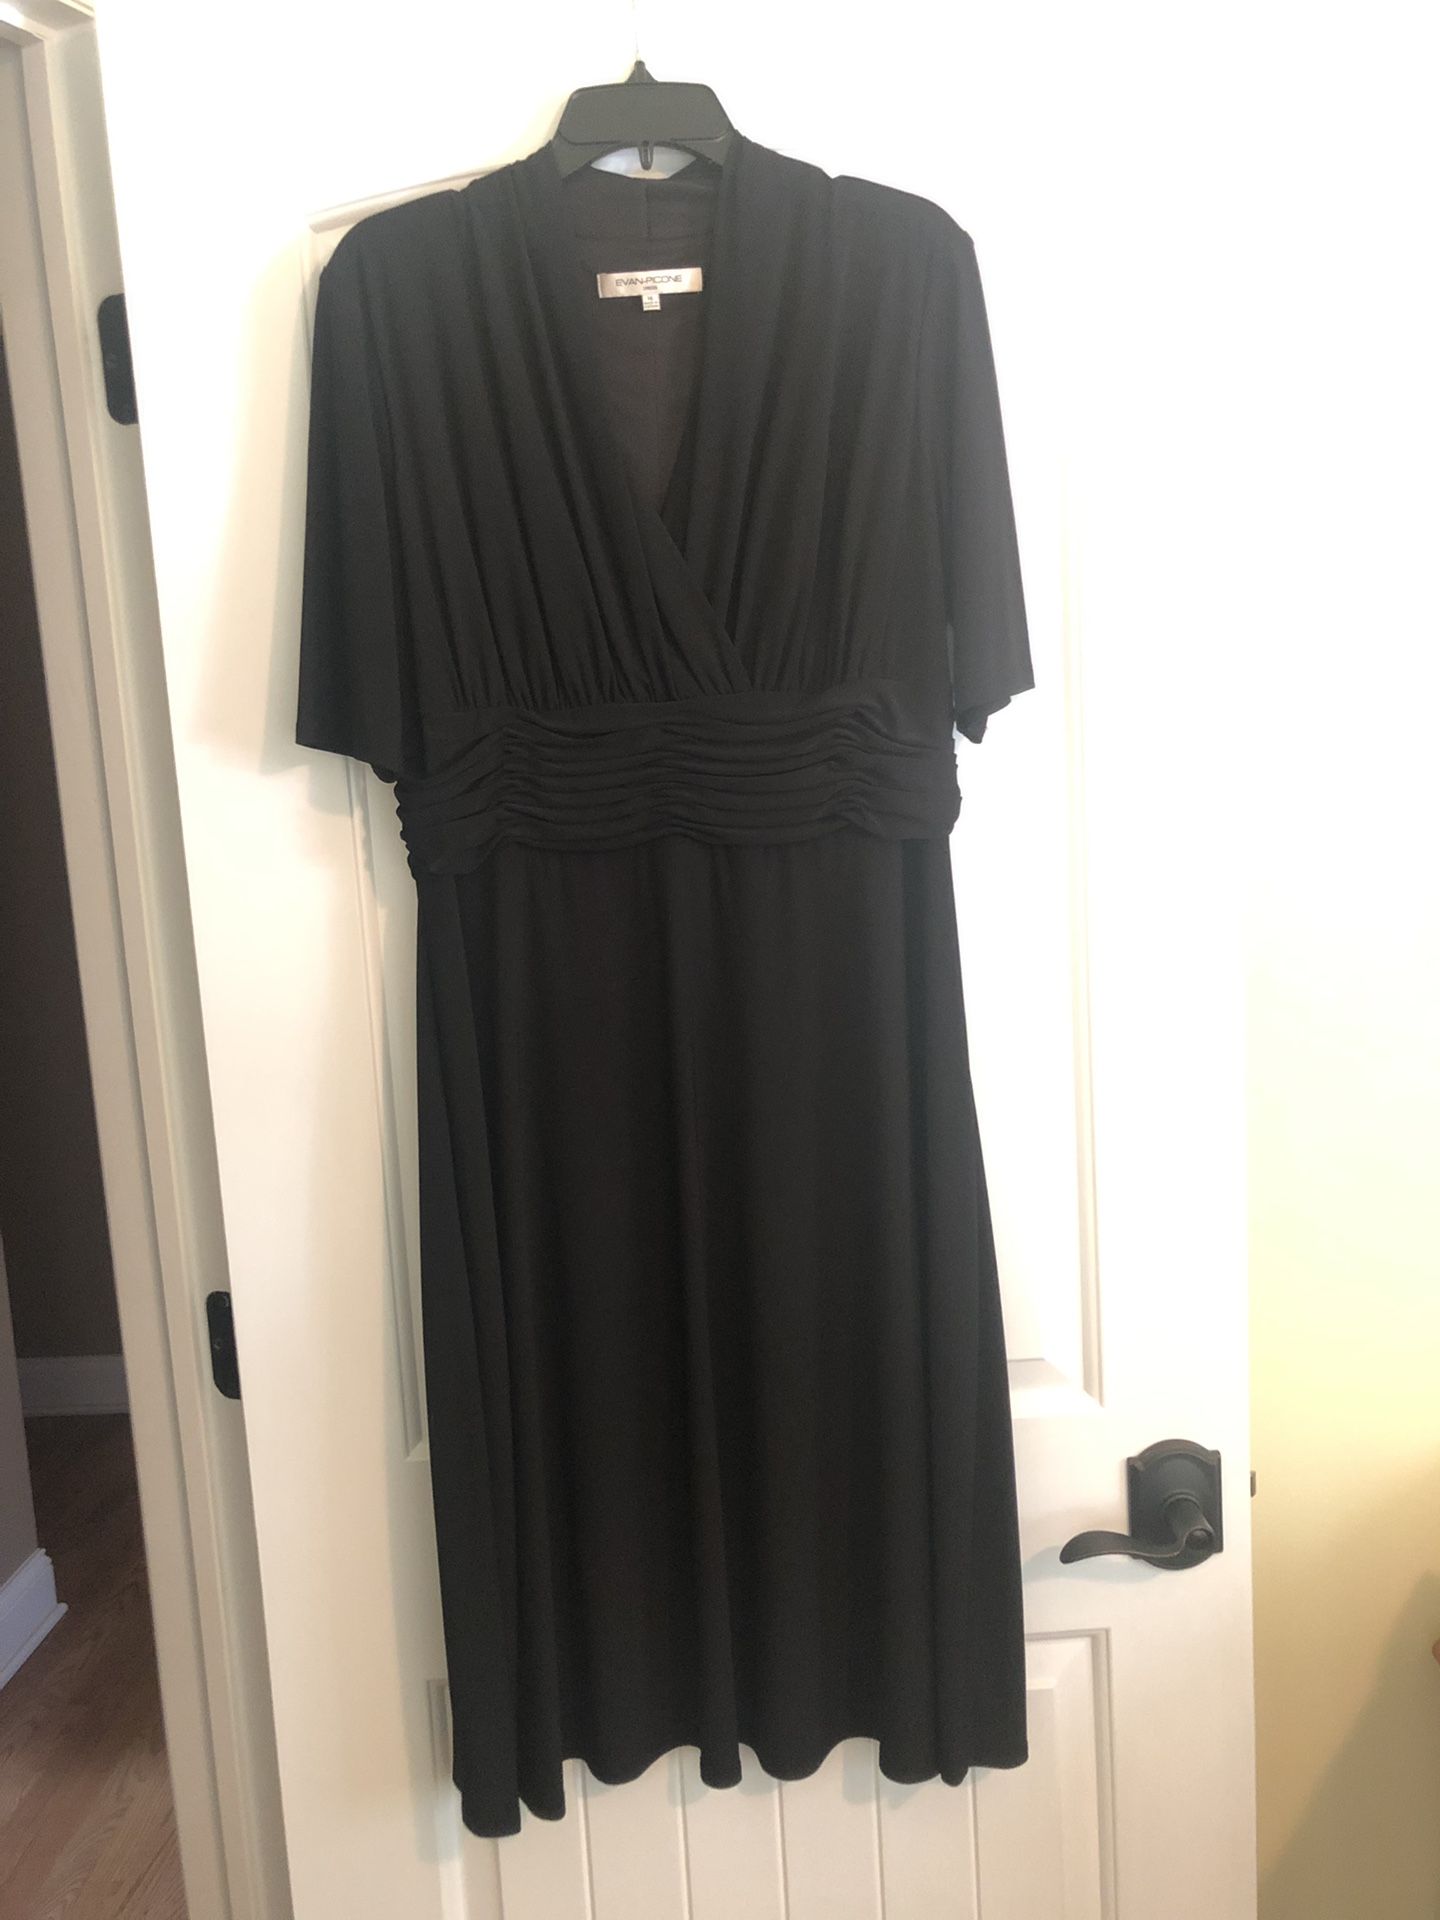 Black dress, size 16